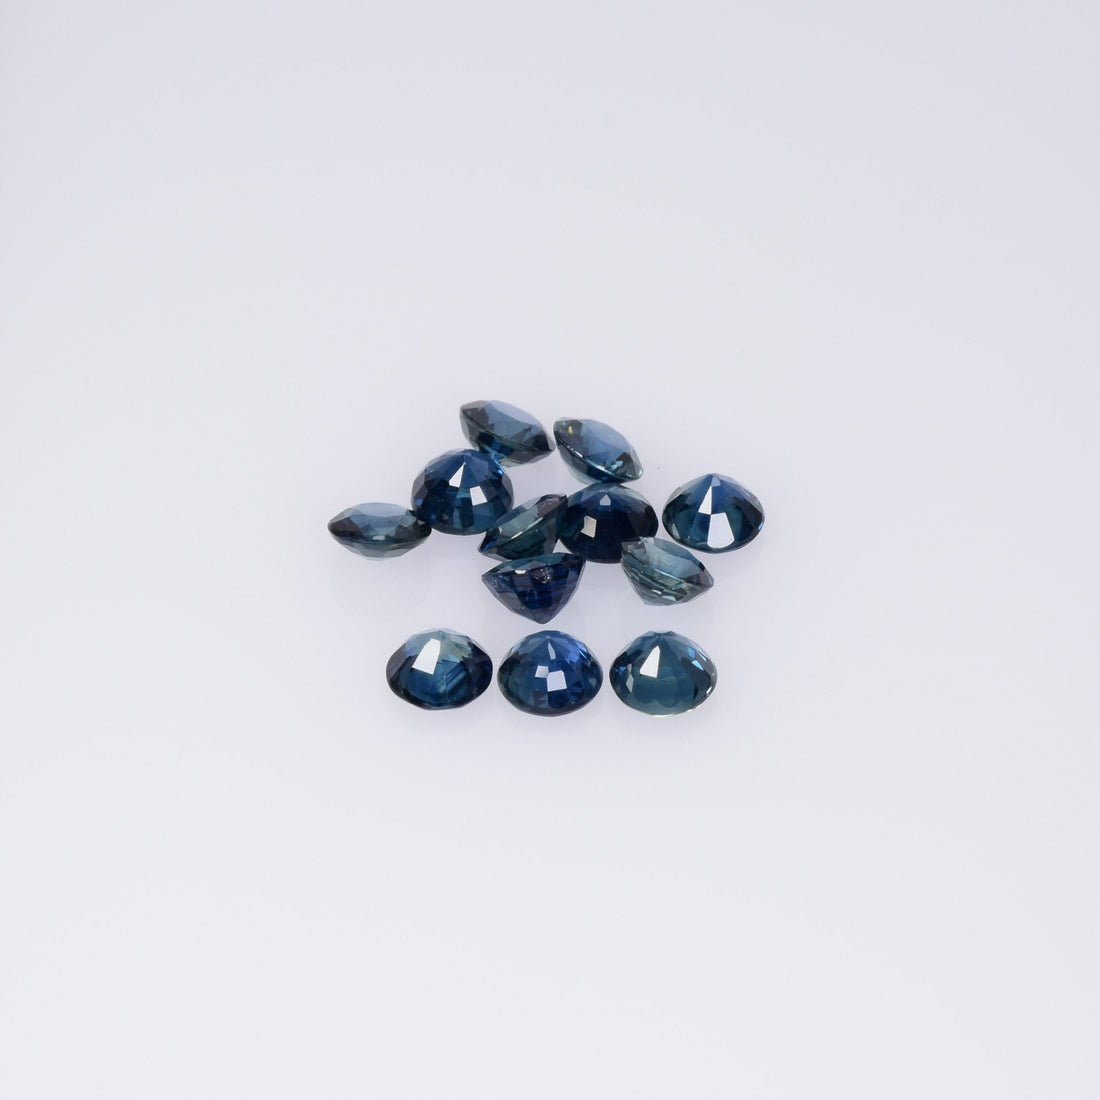 3.2-4.7 mm Natural Blue Sapphire Loose Gemstone Round Cut